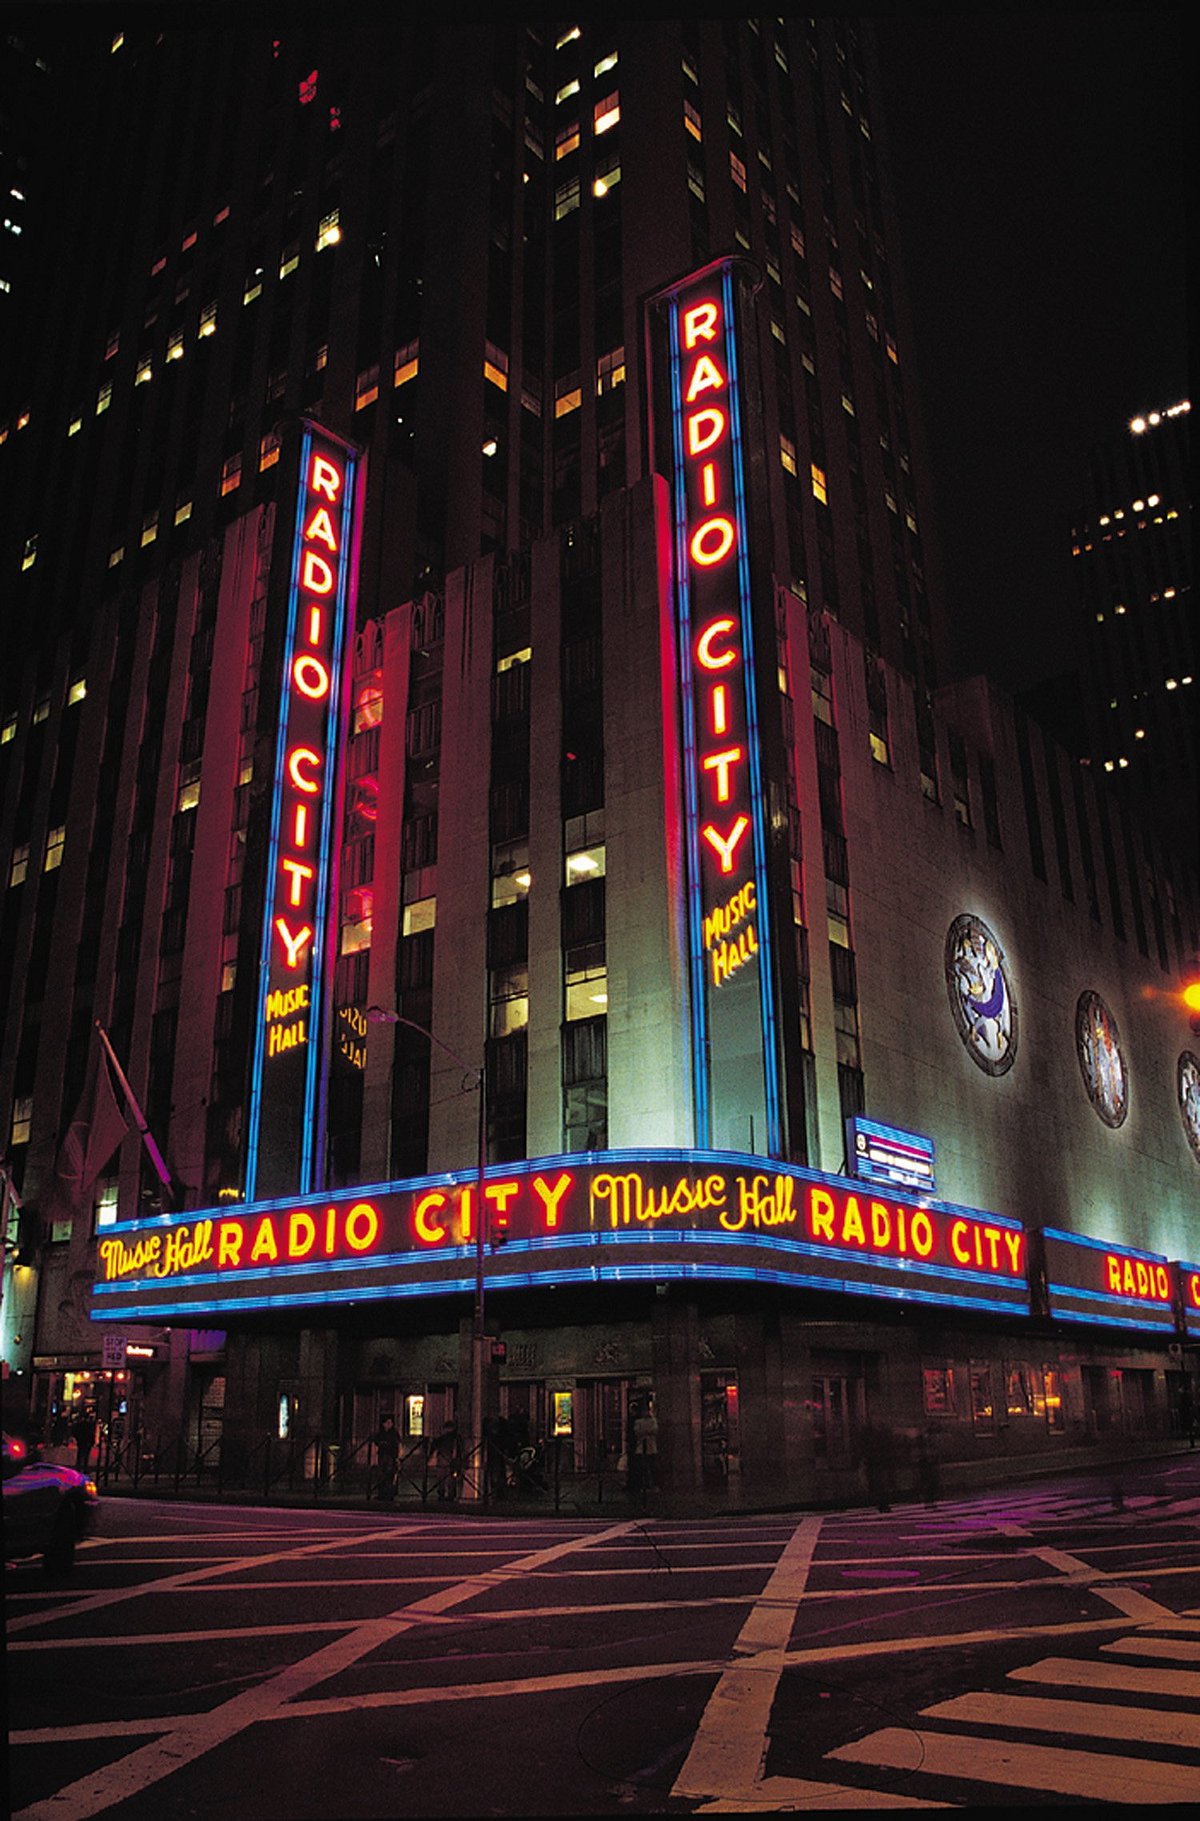 Radio City Music Hall (New York City) All You Need to Know